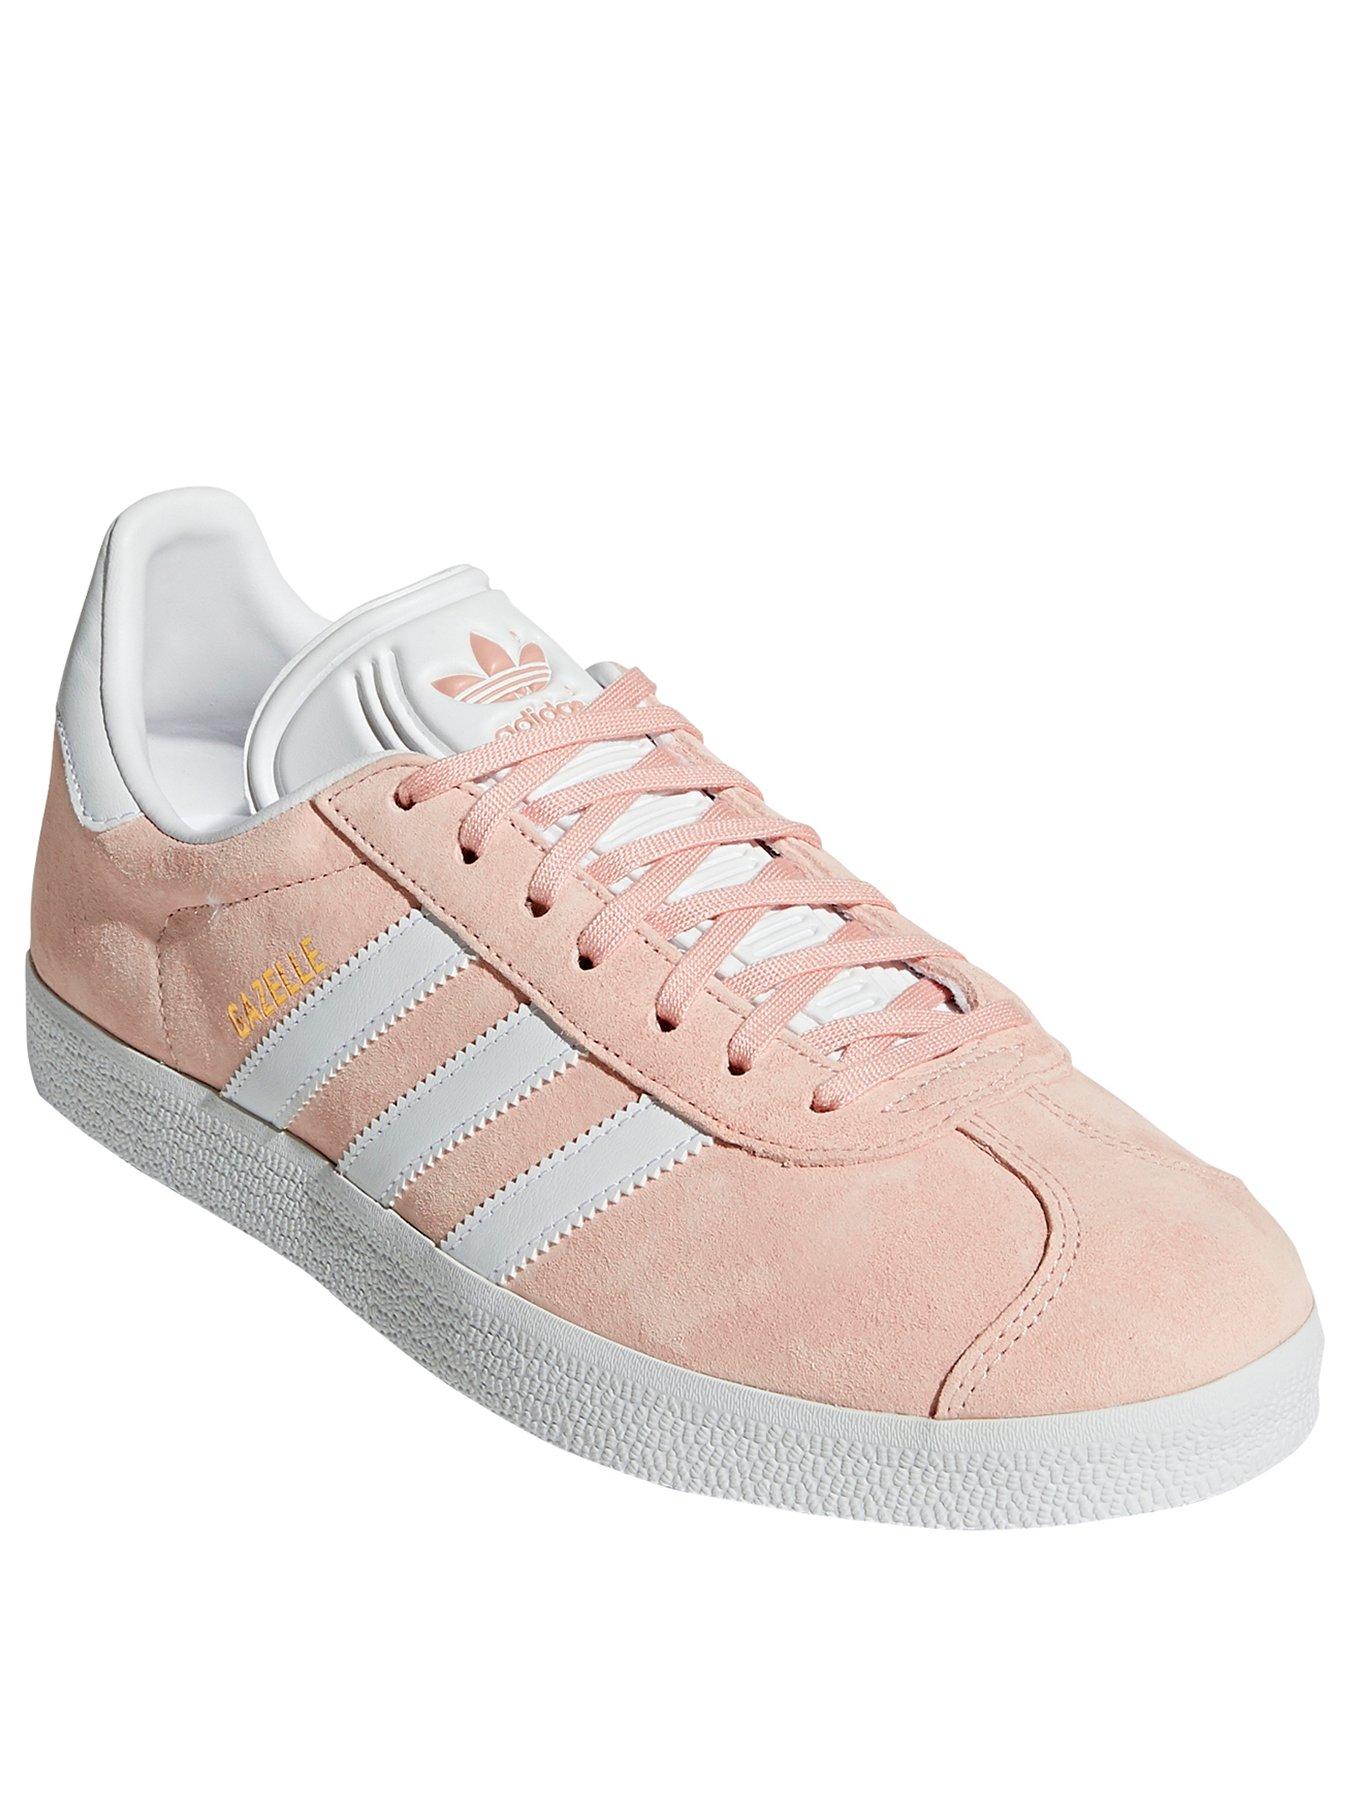 pink adidas gazelle size 5